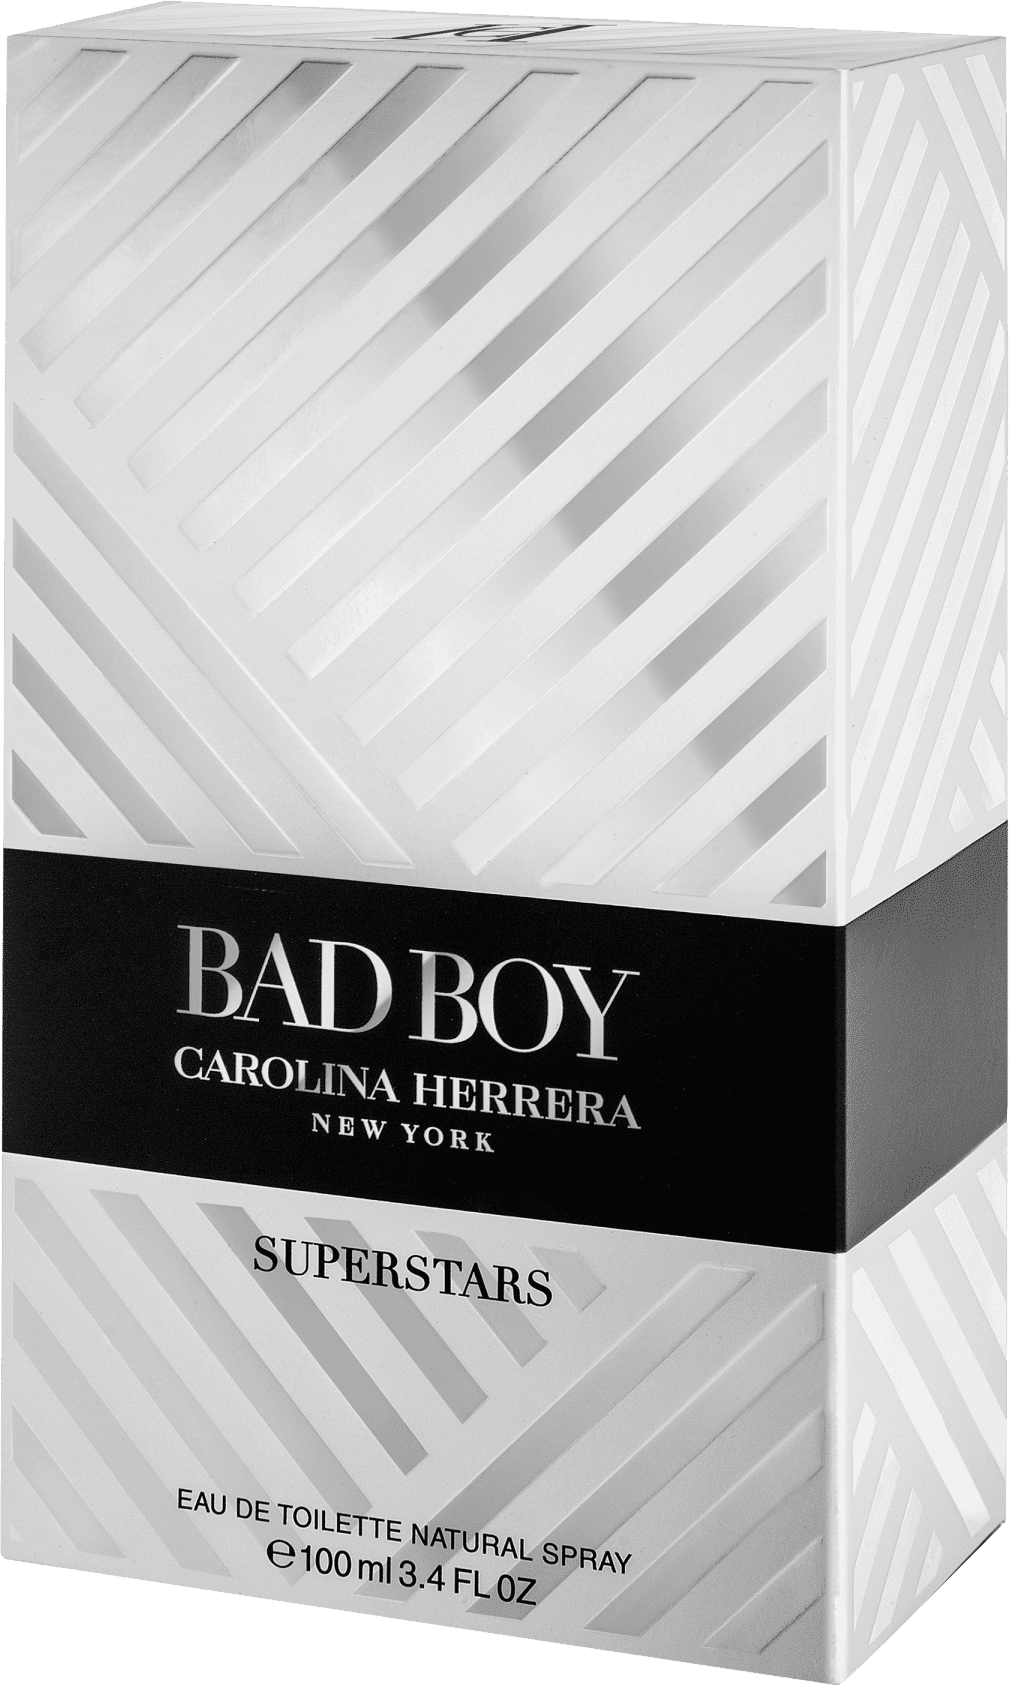 Bad Boy Superstars by Carolina Herrera